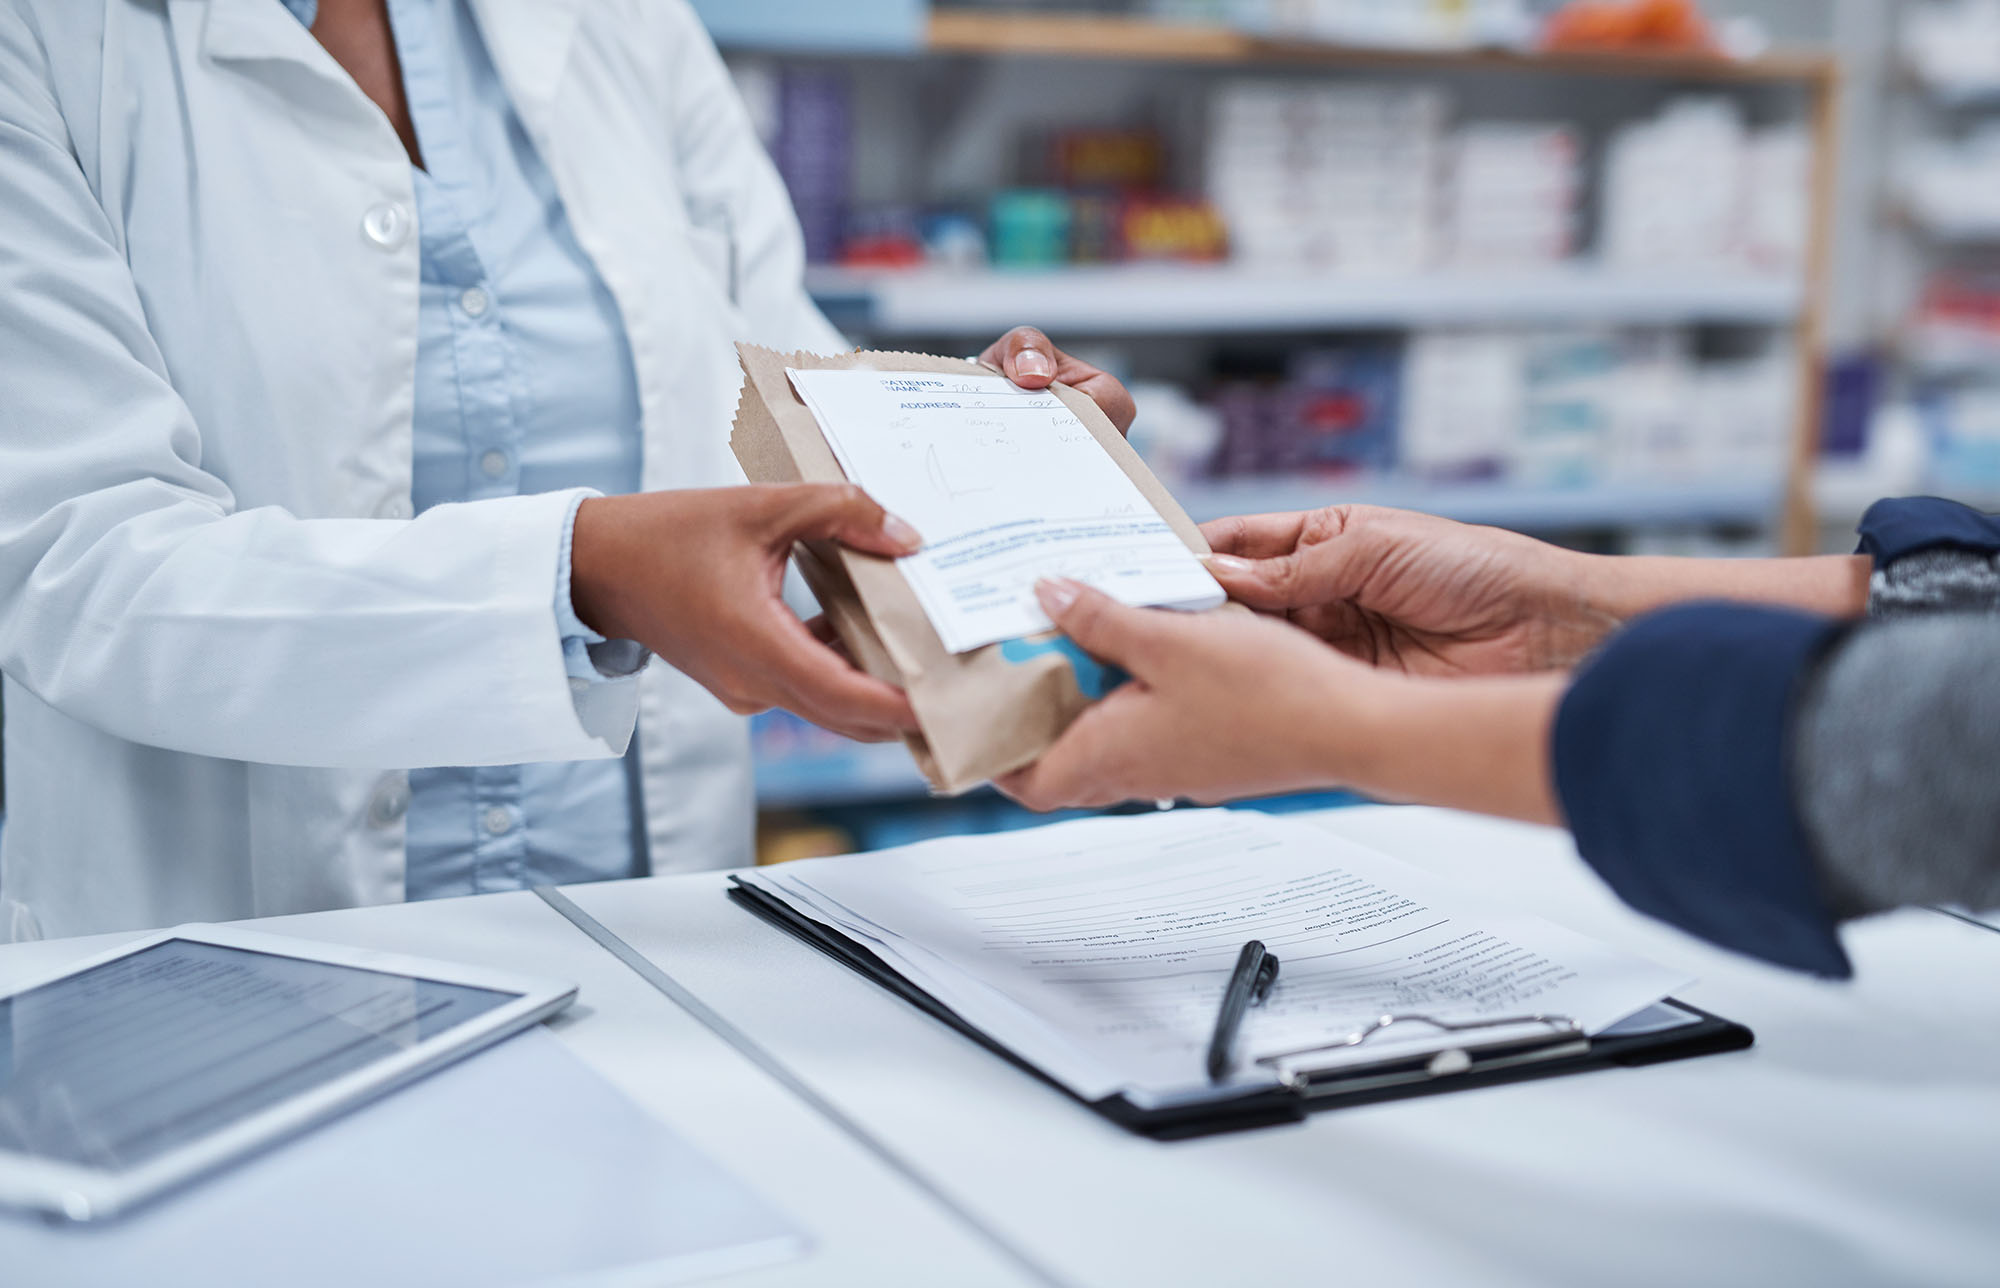 Karen Ferguson: Pharmacy benefit managers must be reined in